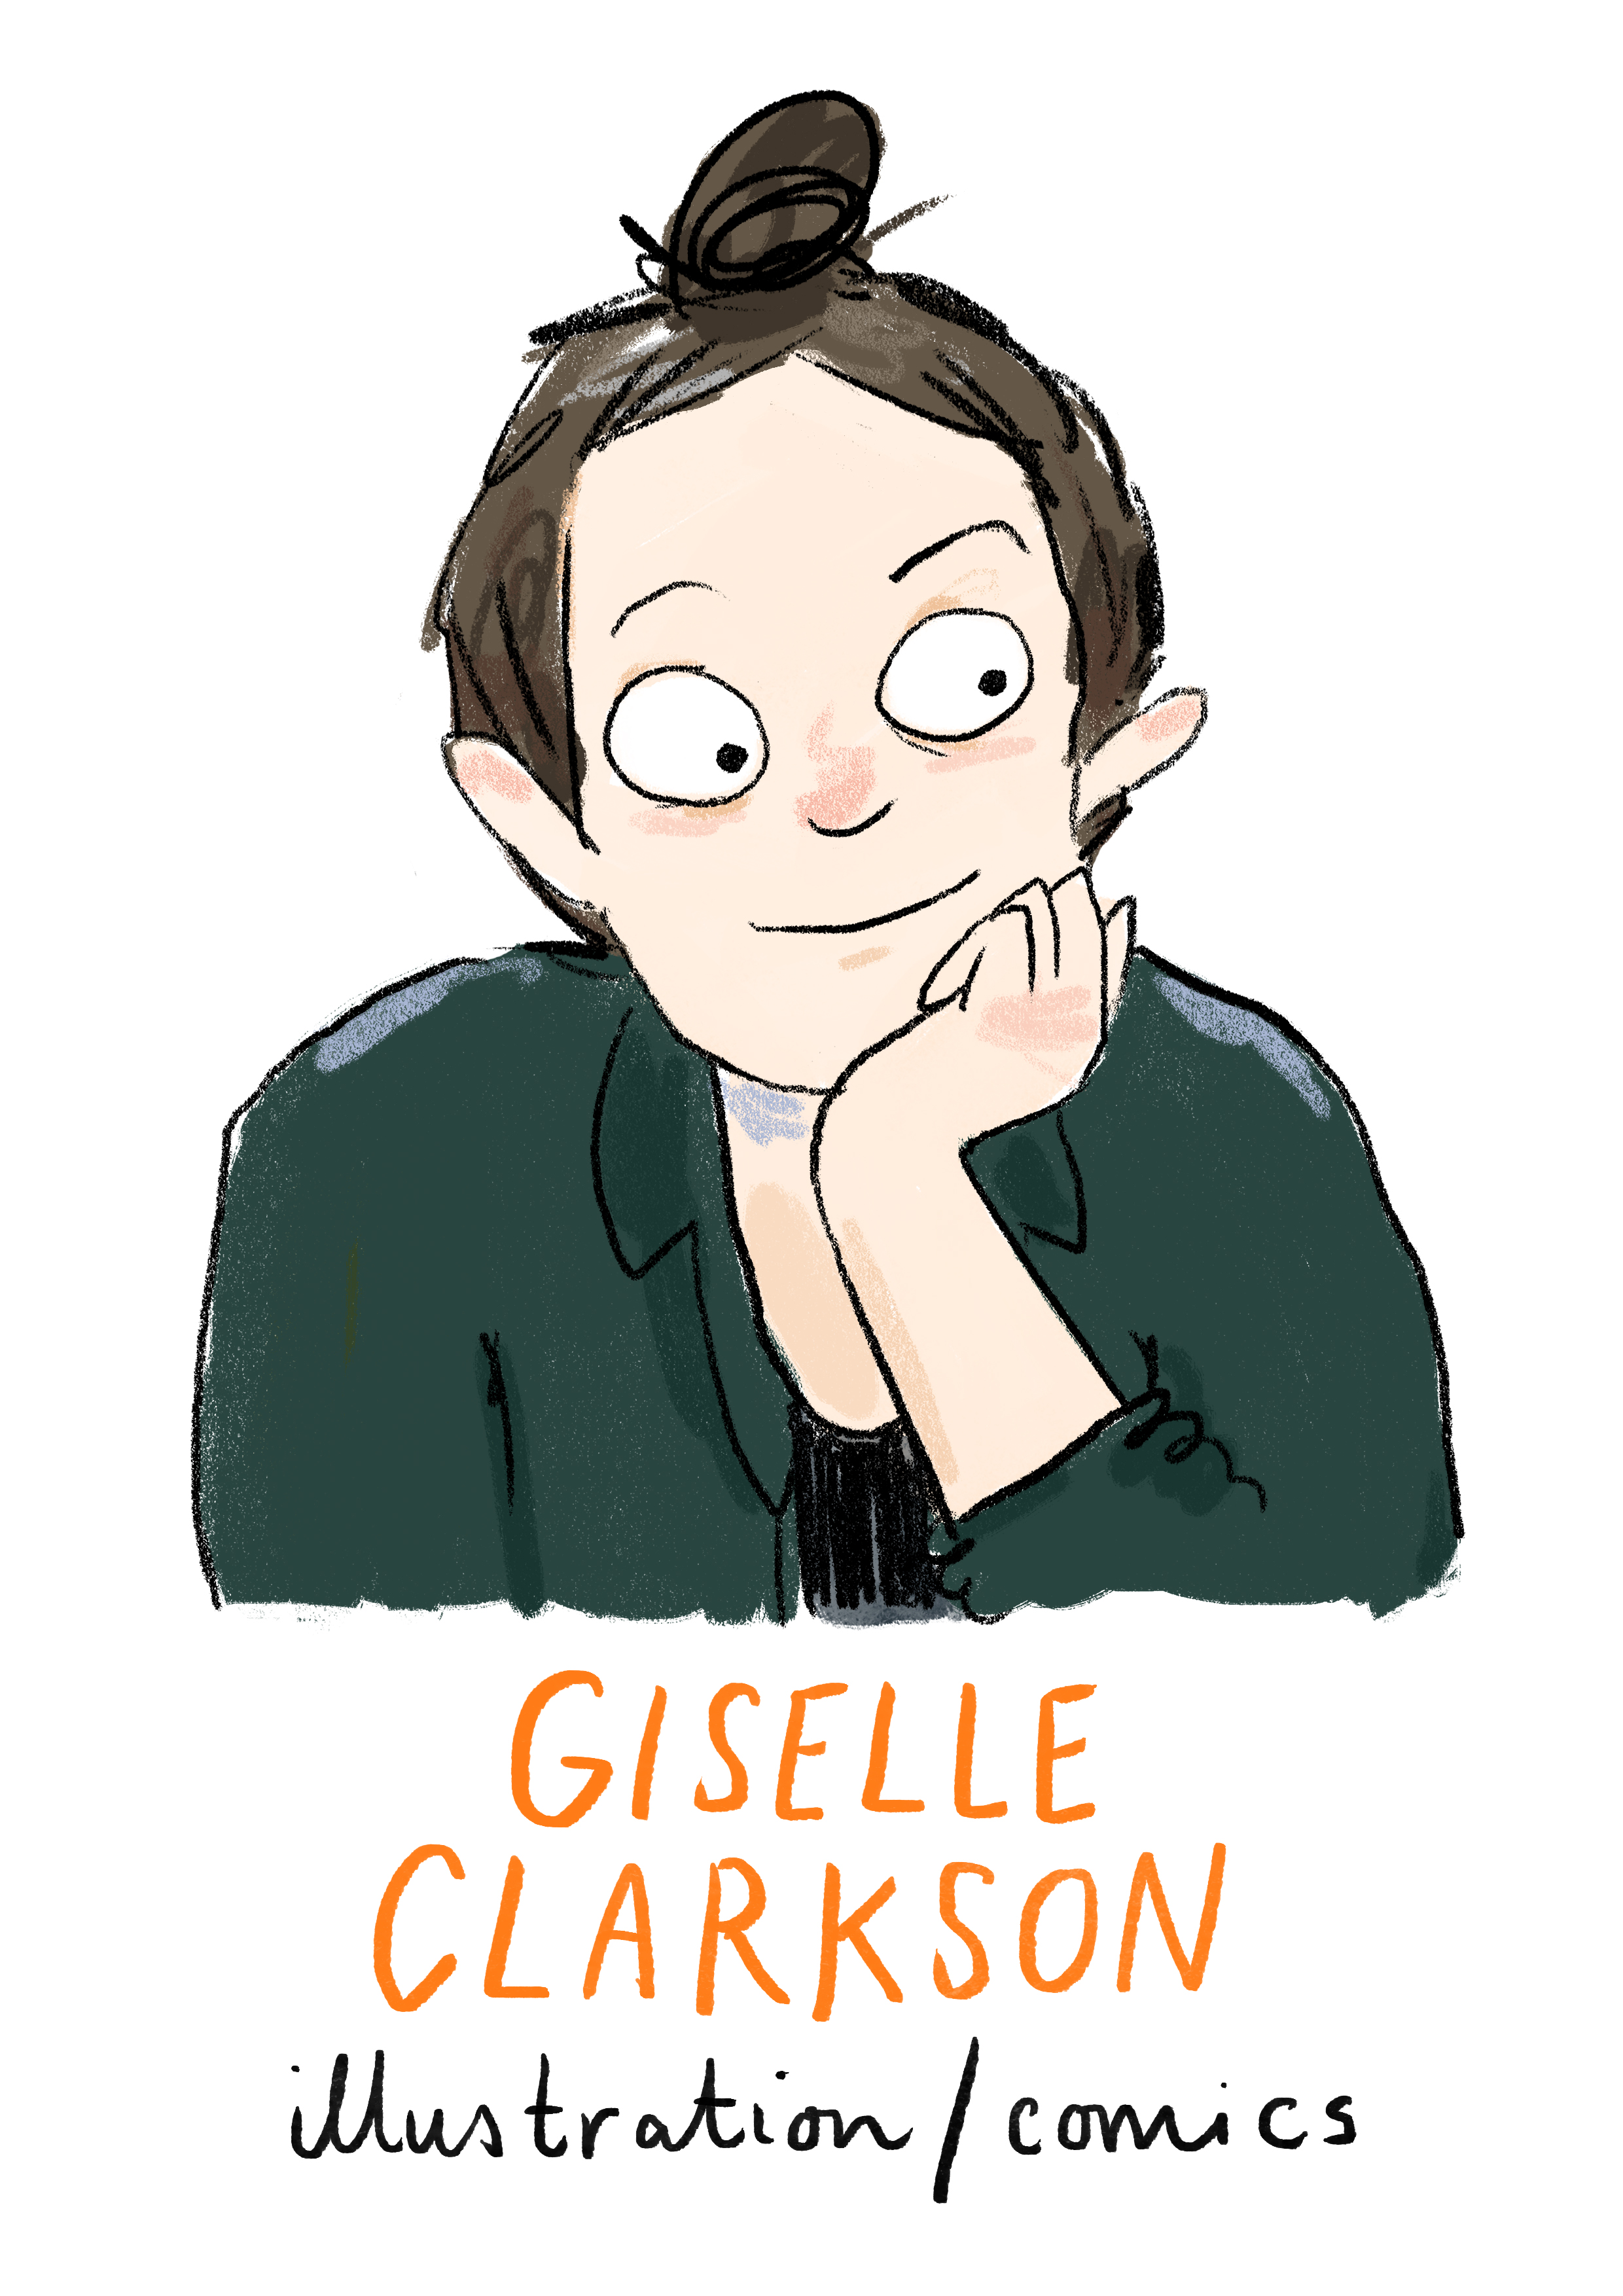 Giselle Clarkson Illustration/Comics